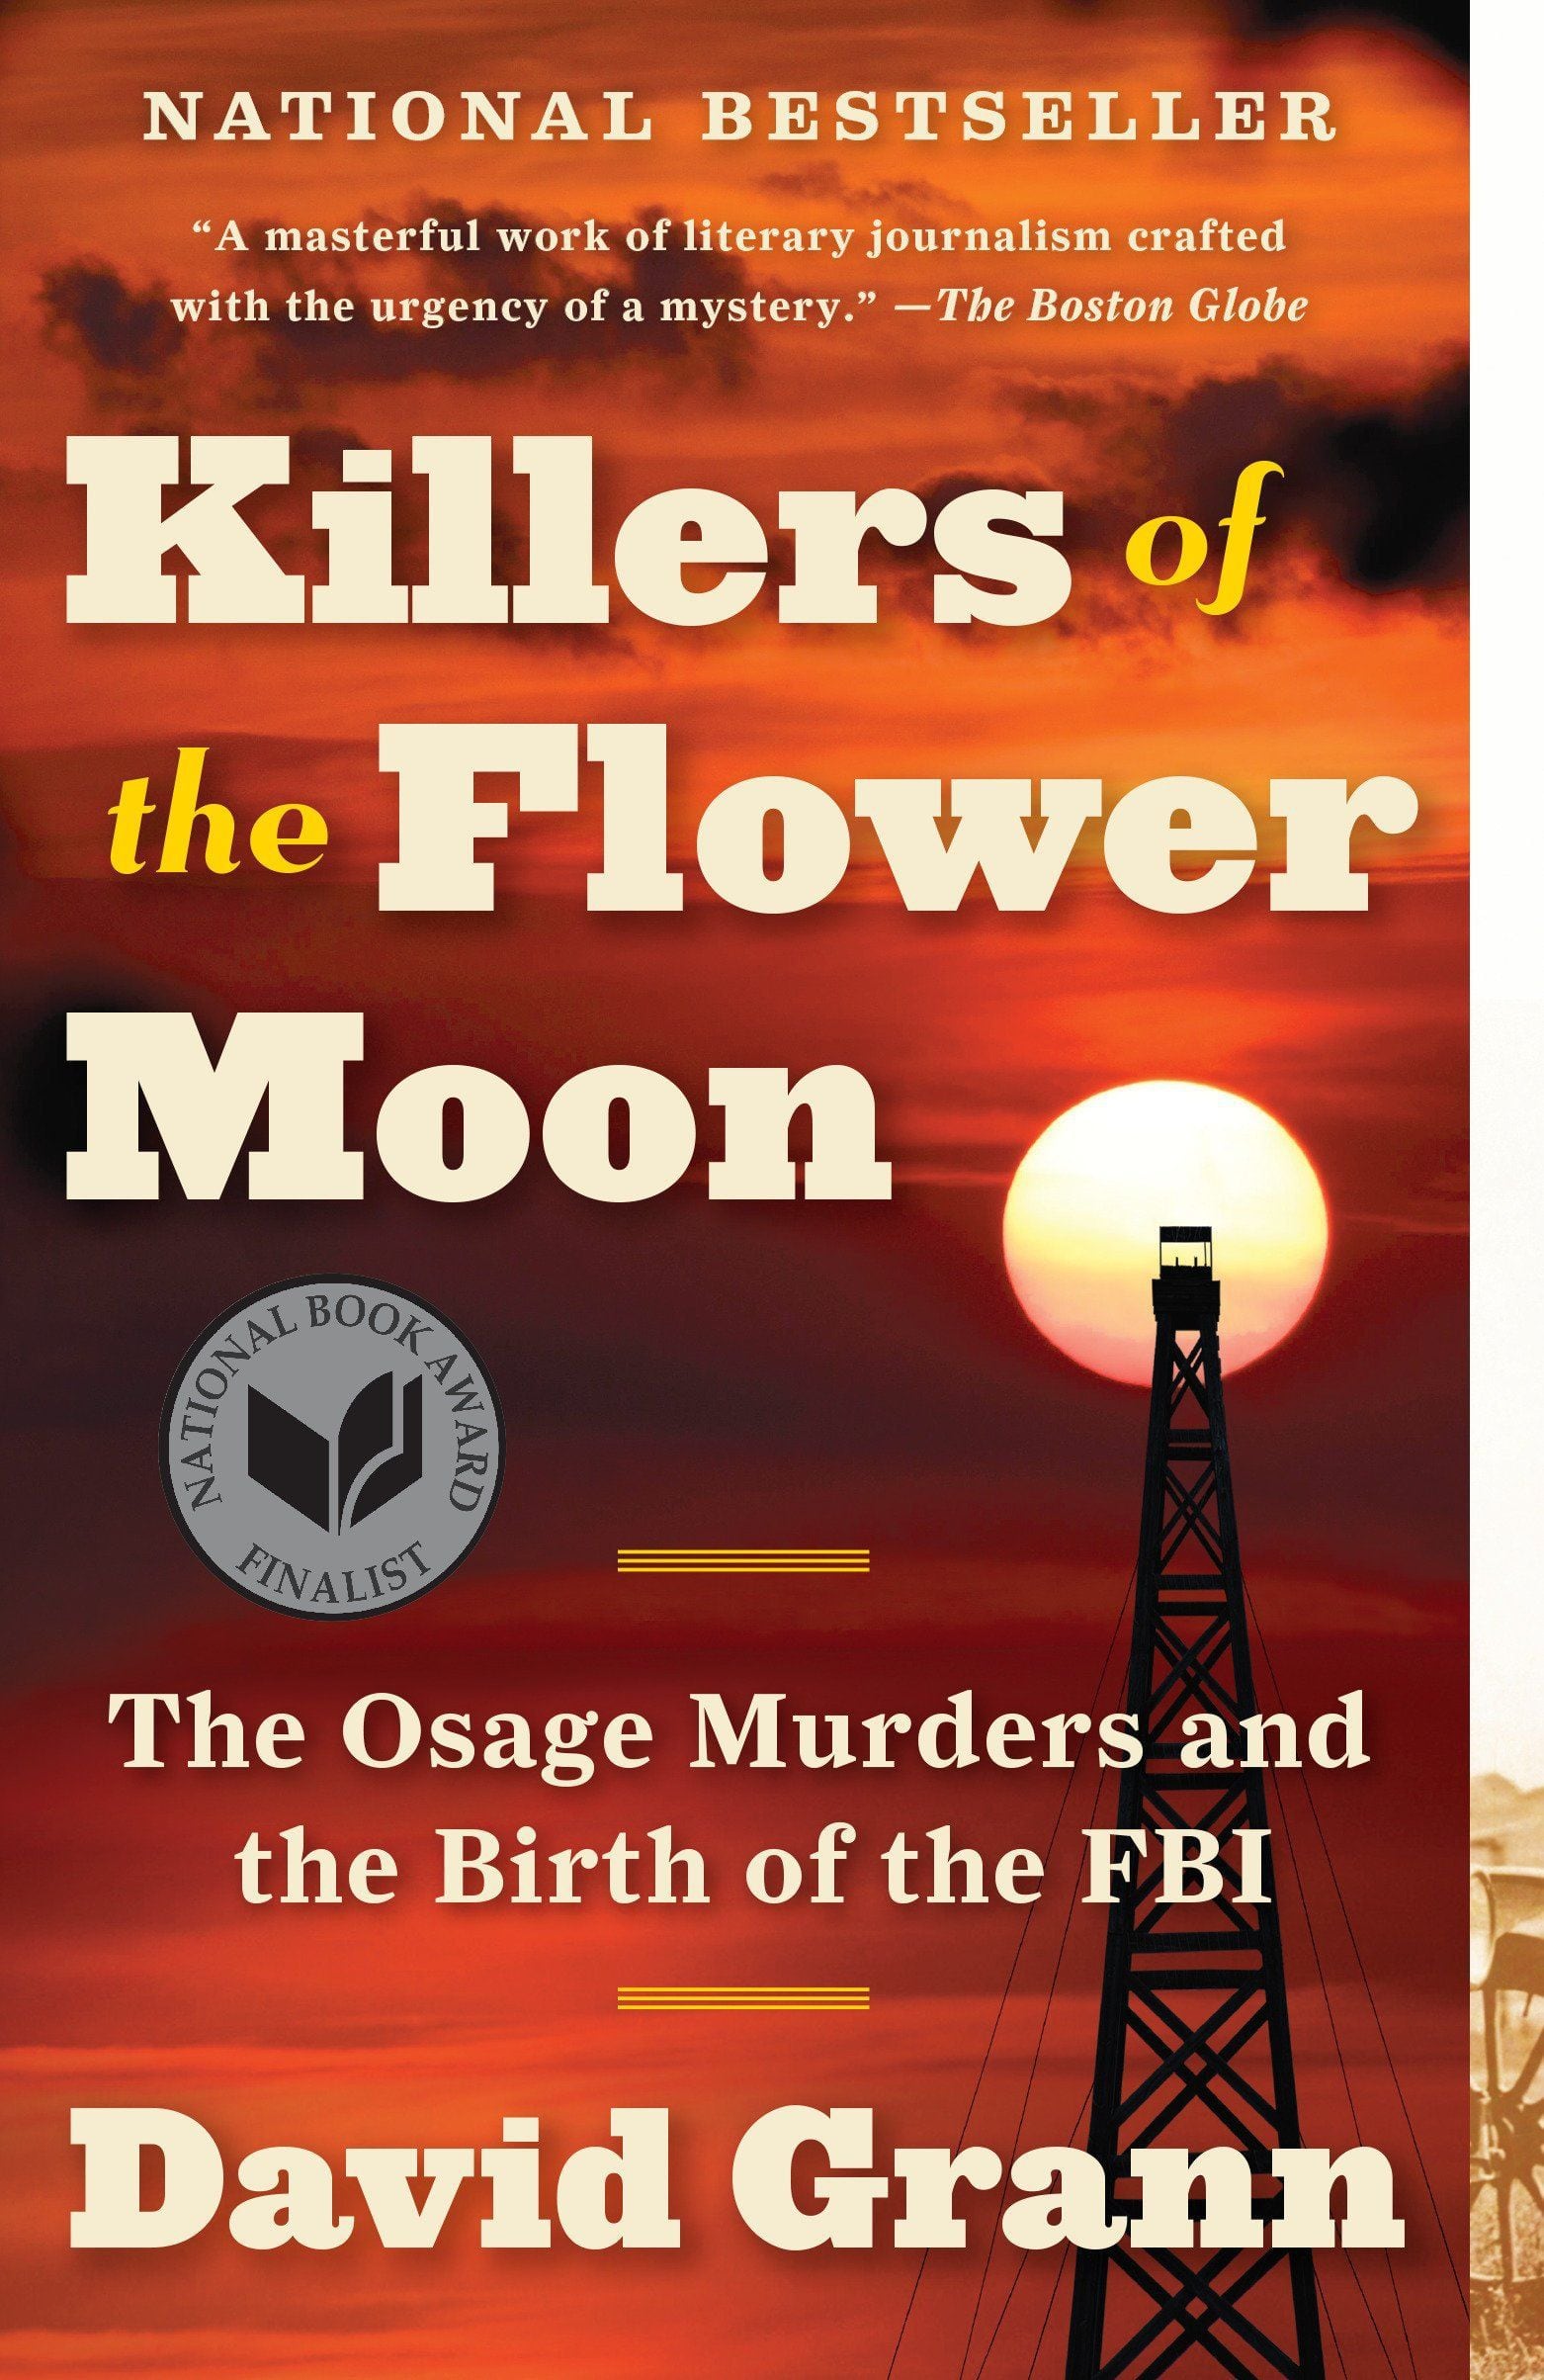 Portada oficial del libro "Killers of the Flower Moon". (Doubleday)